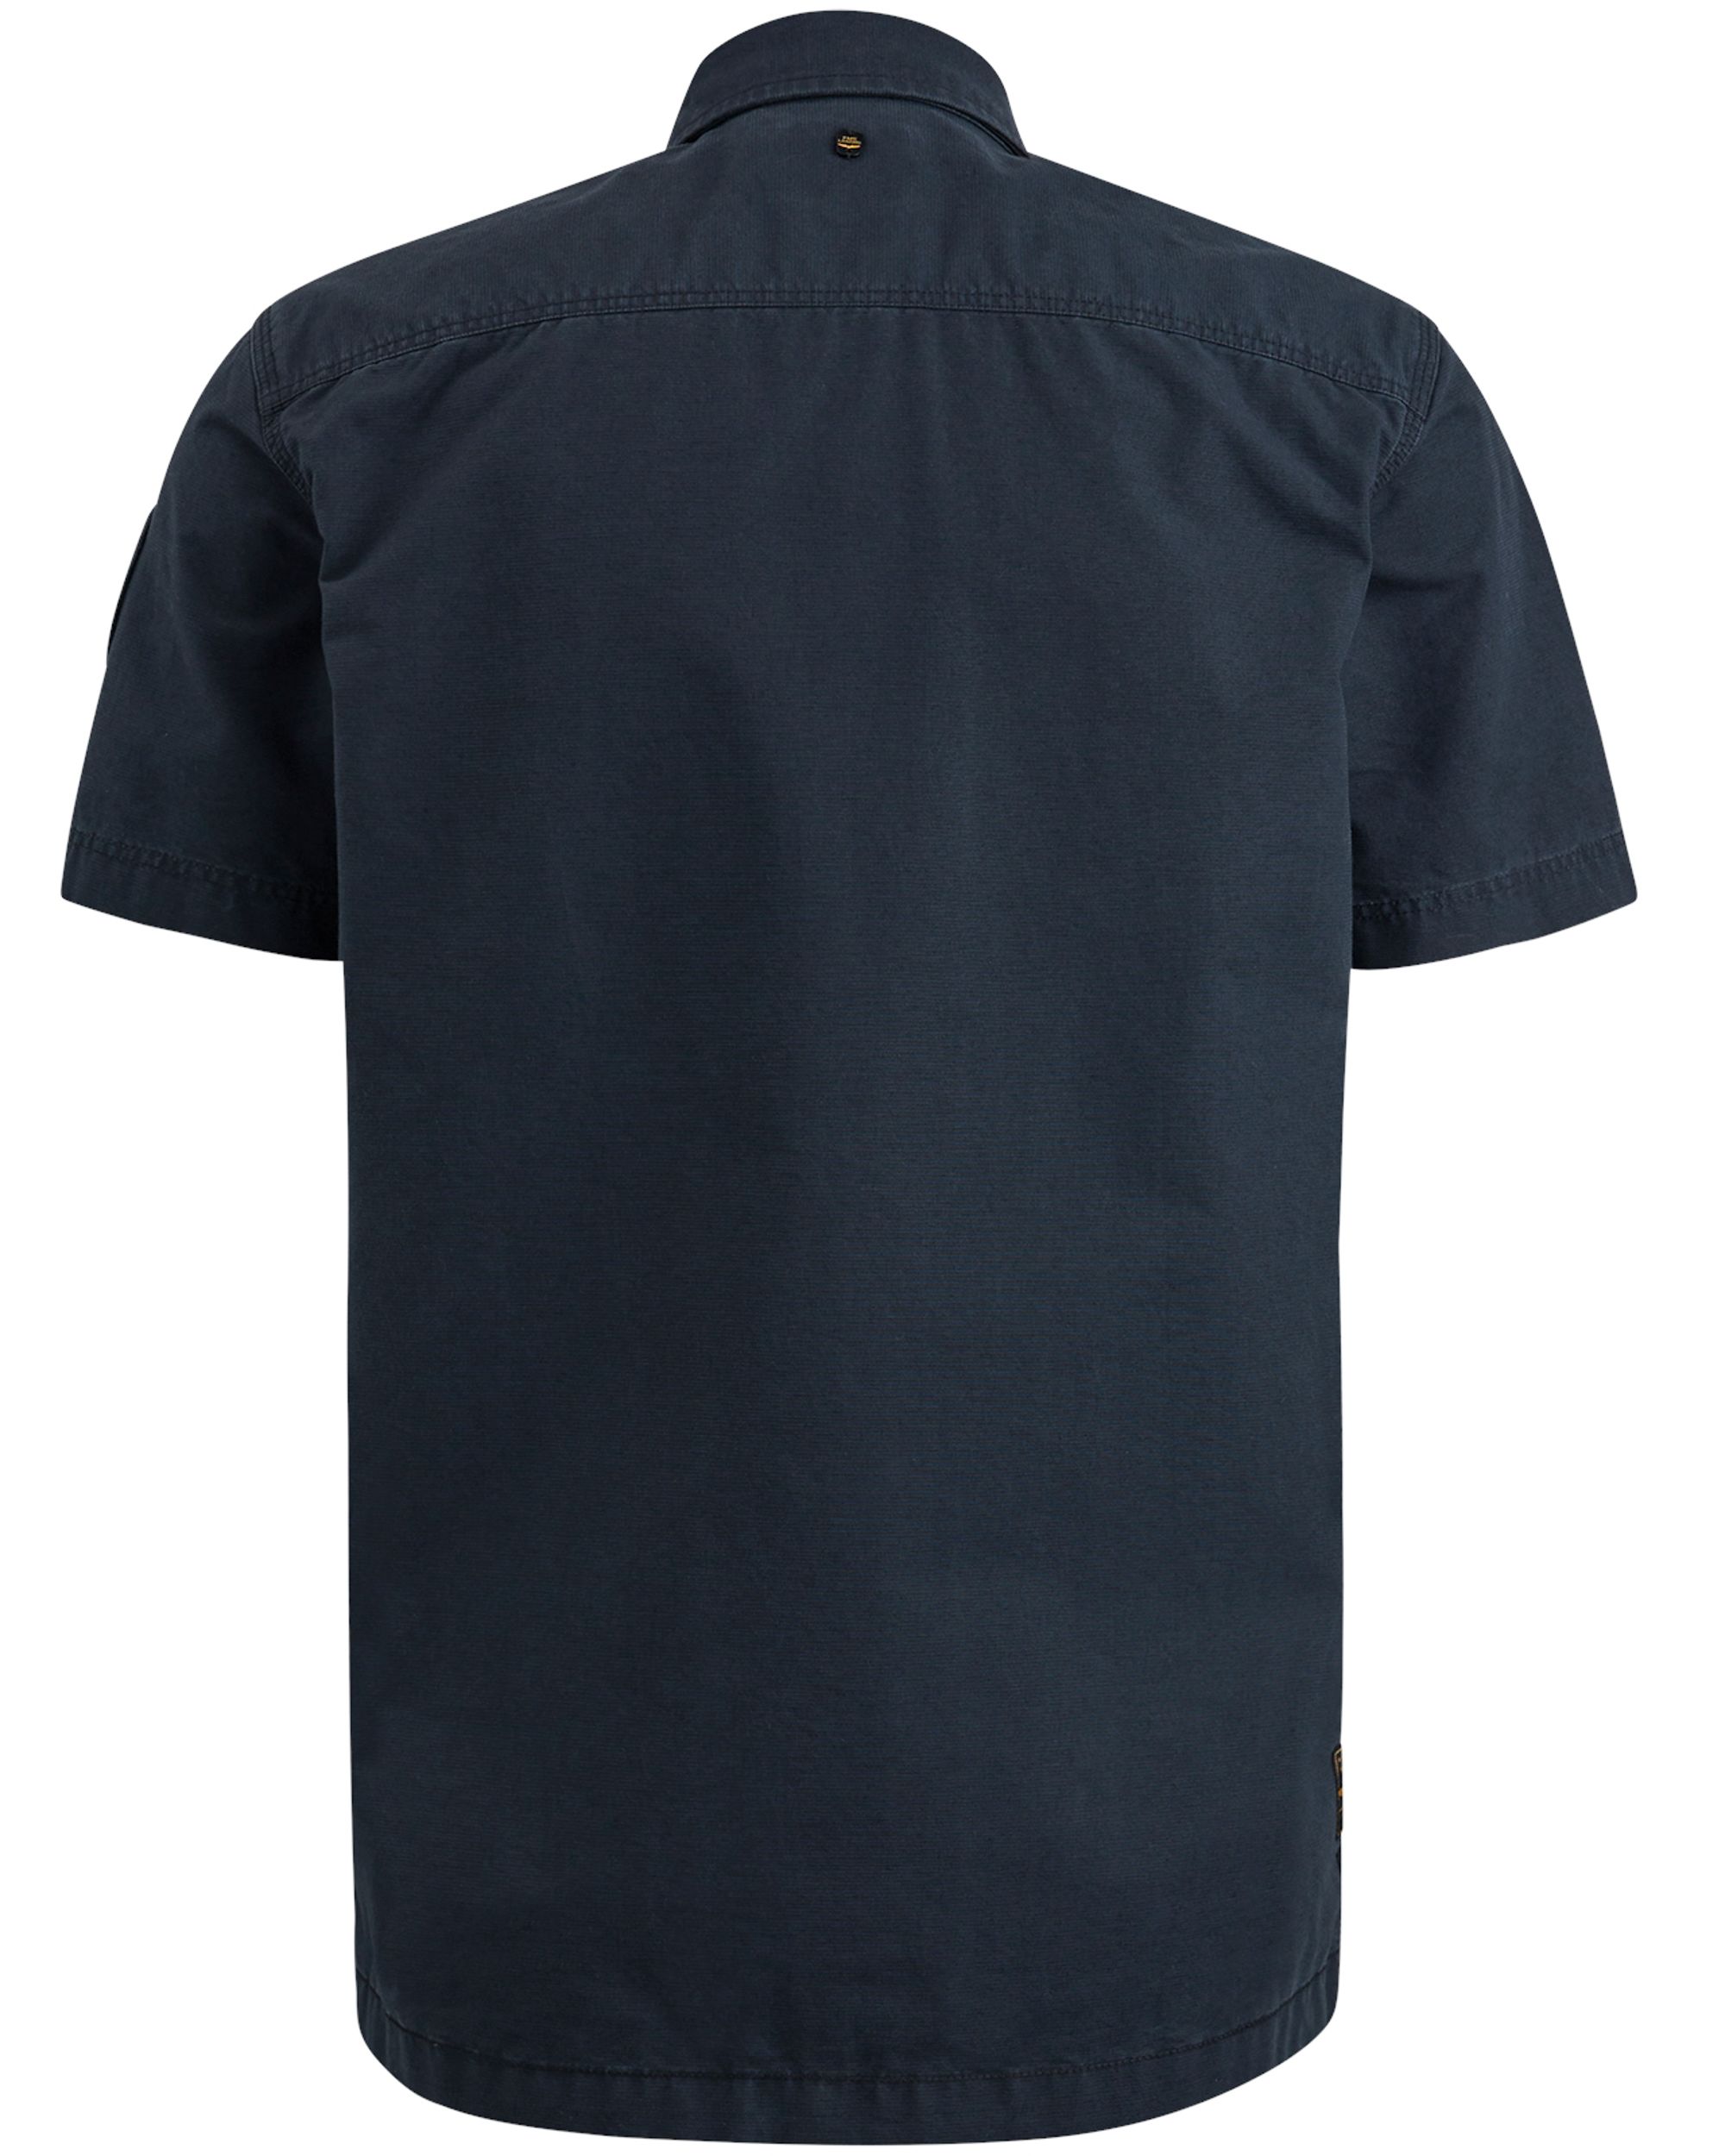 PME Legend Casual Overhemd KM Blauw 092504-001-L